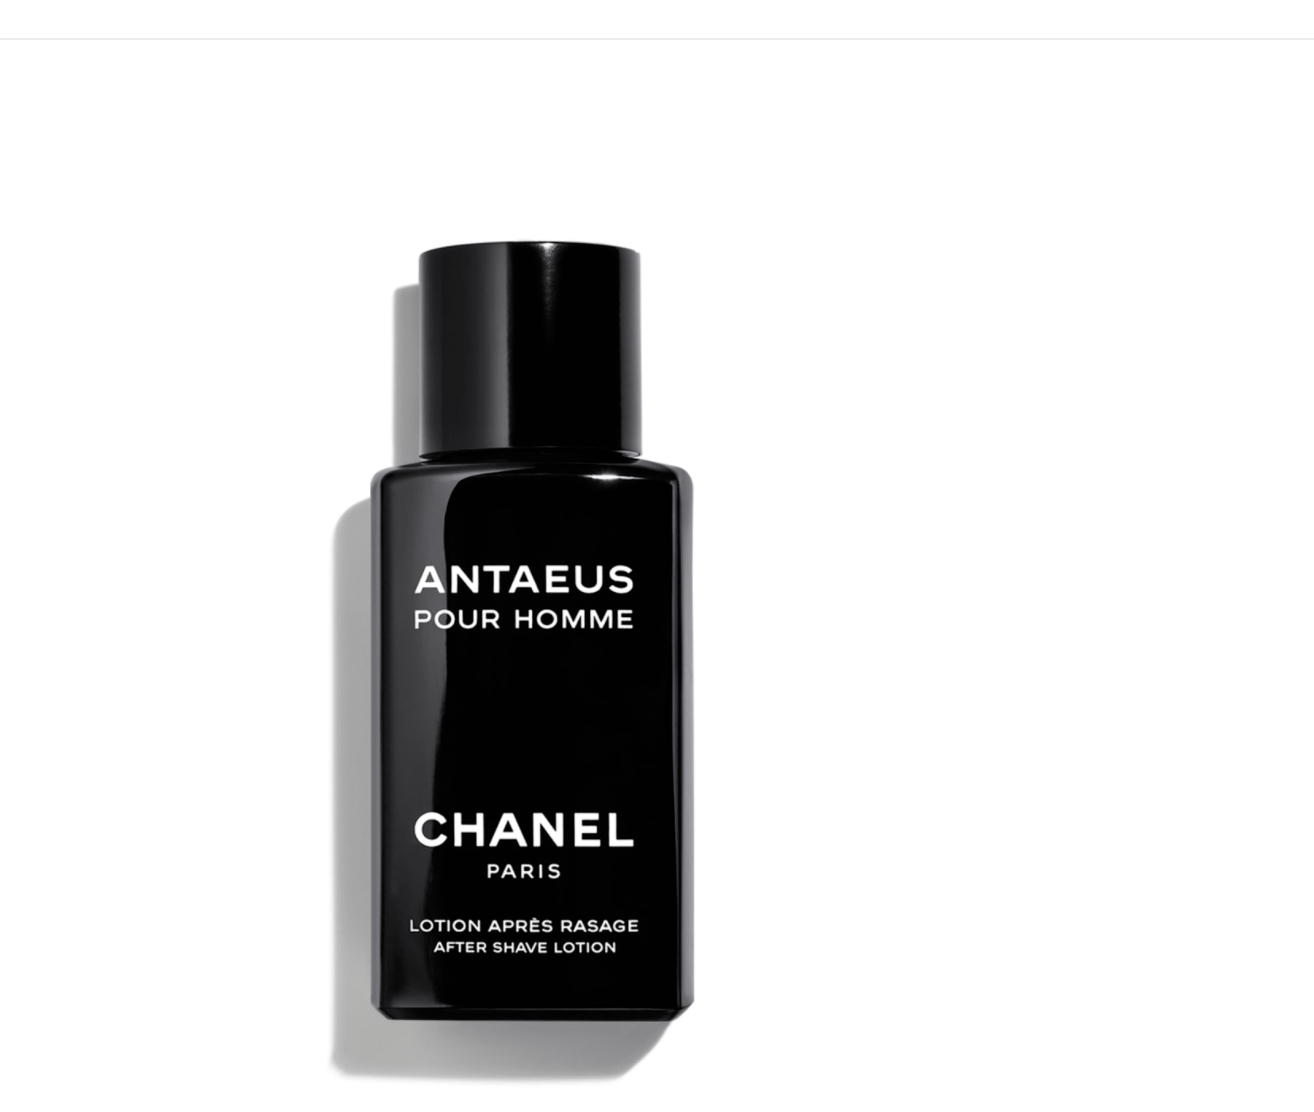 Antaeus by Chanel Eau de Toilette Spray 3.4 oz (Men)